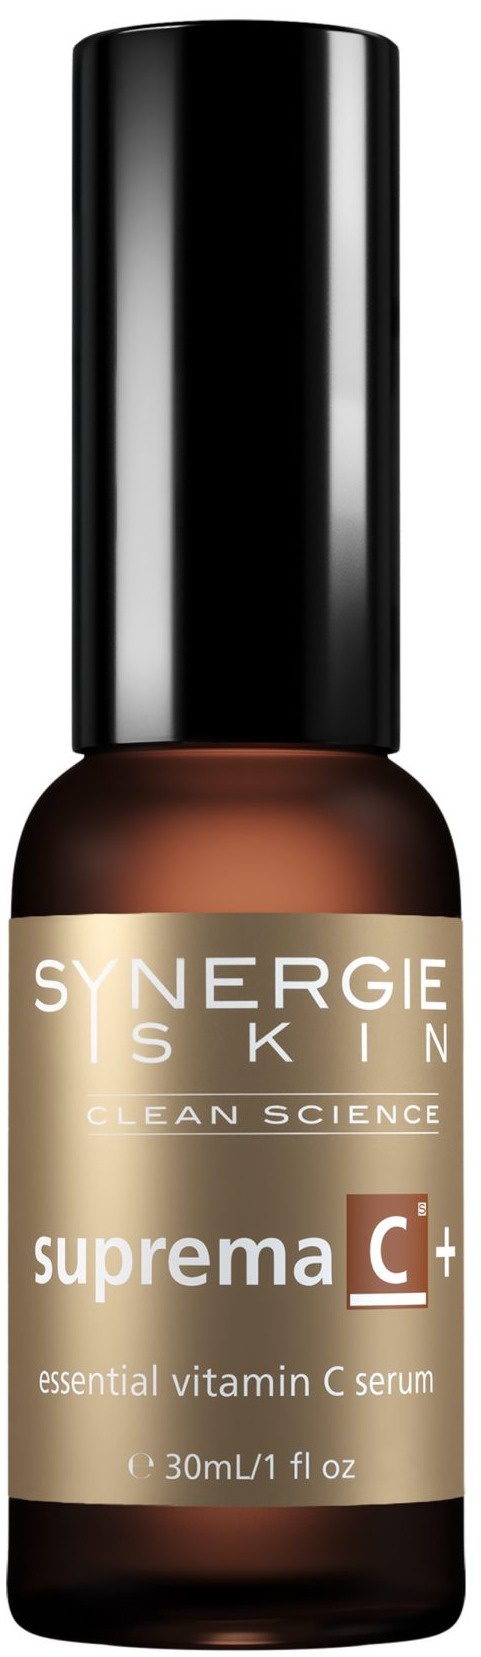 Synergie Skin Suprema-C+ with 20% CMF Tri-acid Complex